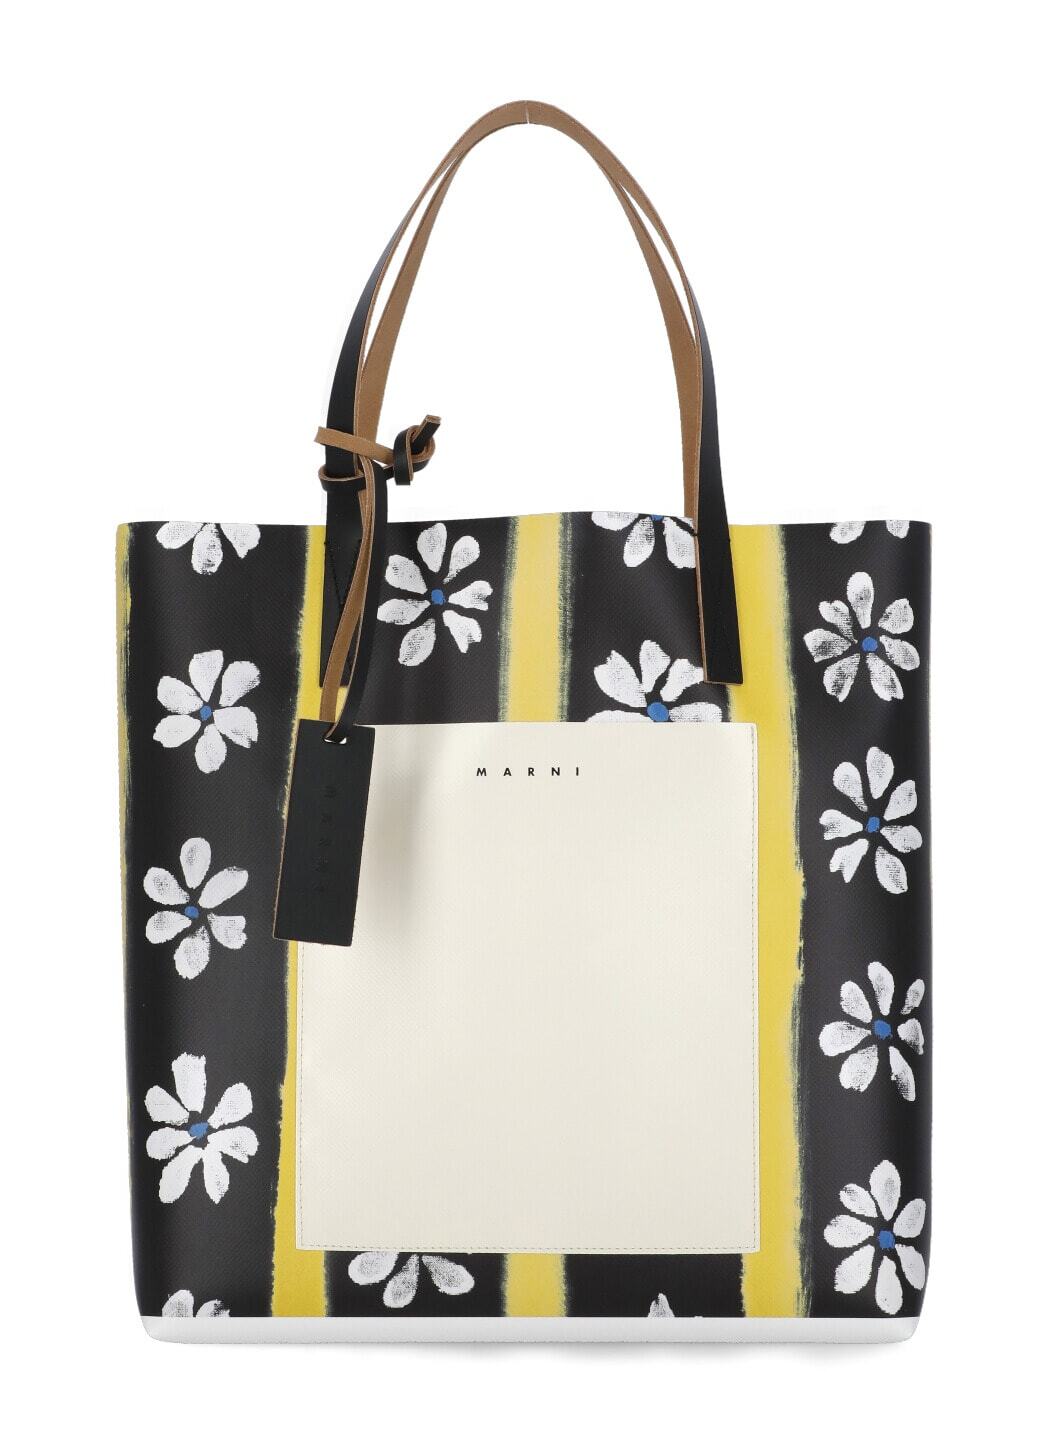 Marni Shopping Bag With Daisy Lane Print in black / white